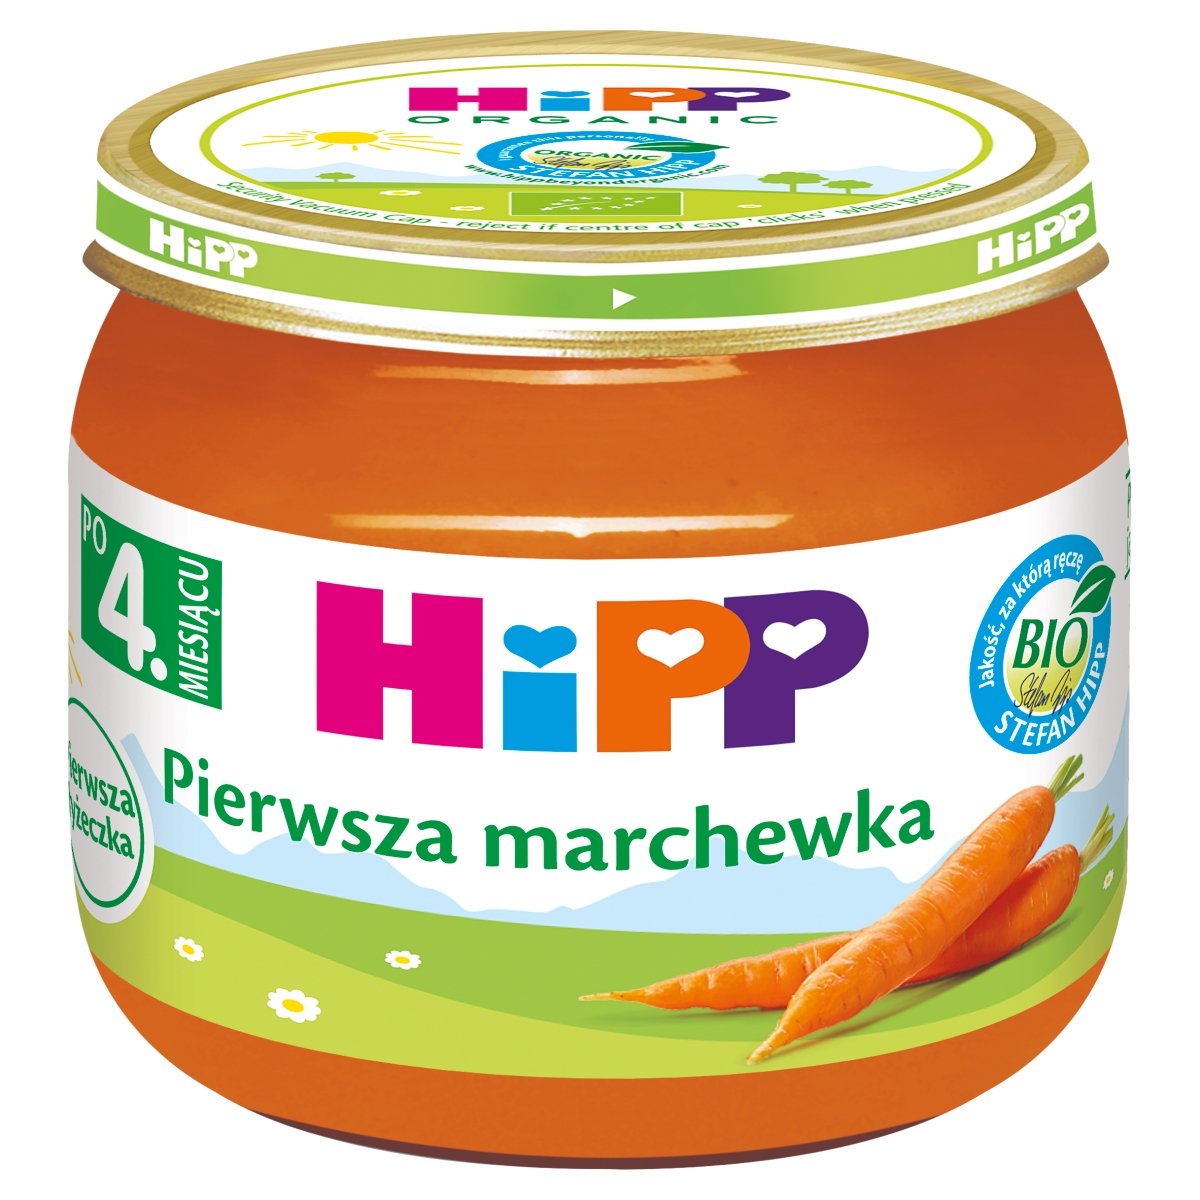 HIPP - BIO deser pierwsza marchewka